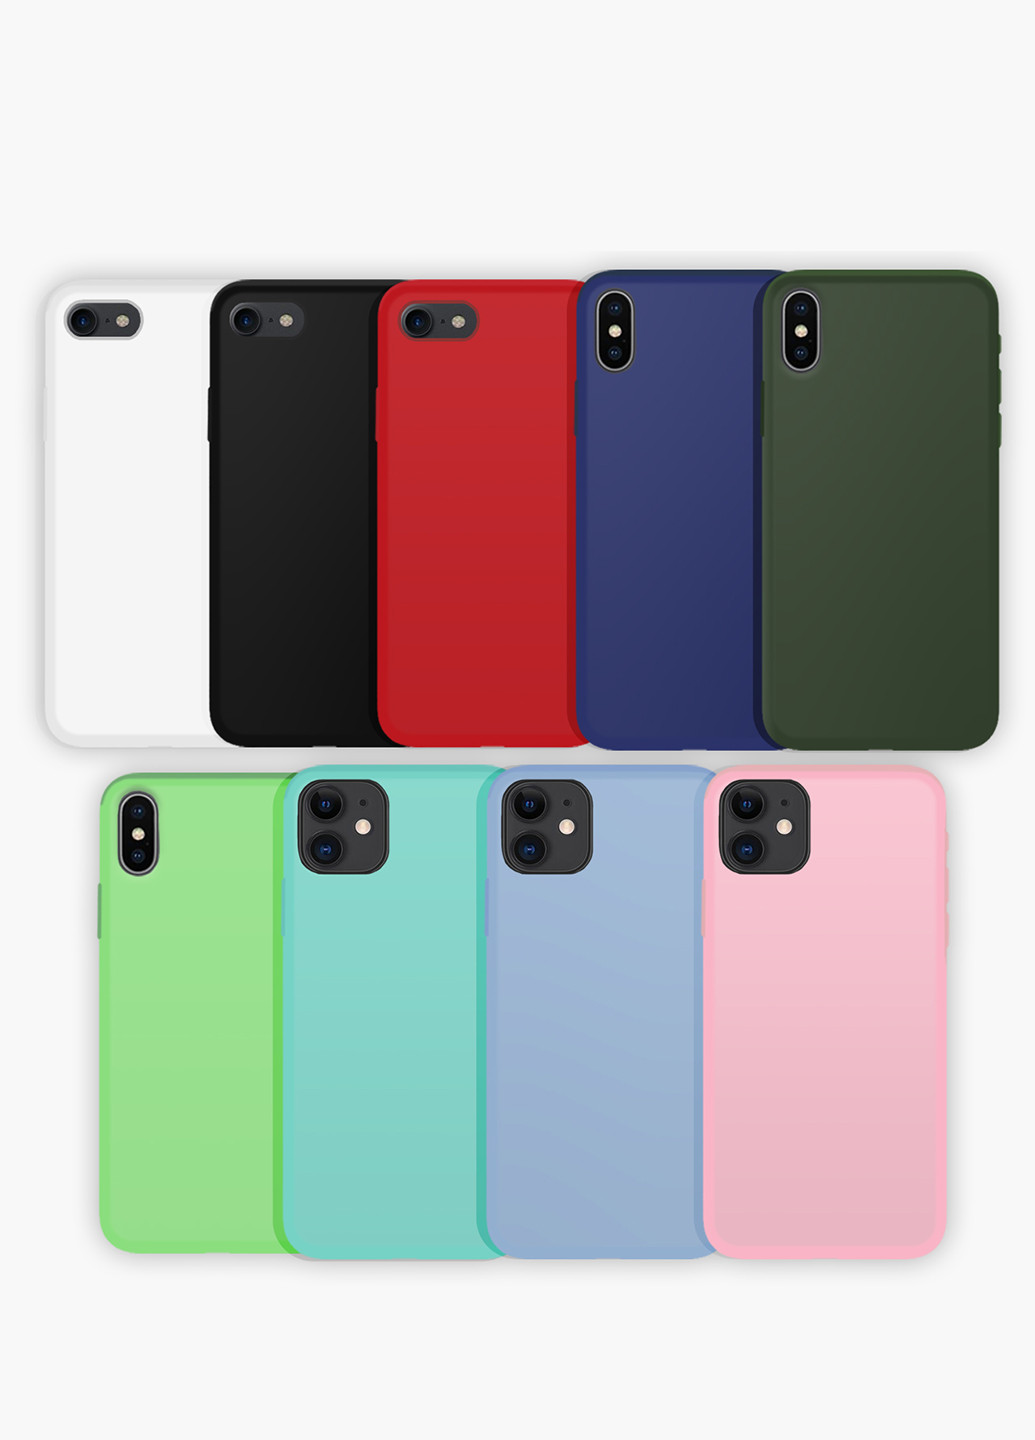 Чехол силиконовый Apple Iphone 8 Лайк Единорог (Likee Unicorn) (6151-1597) MobiPrint (219518116)